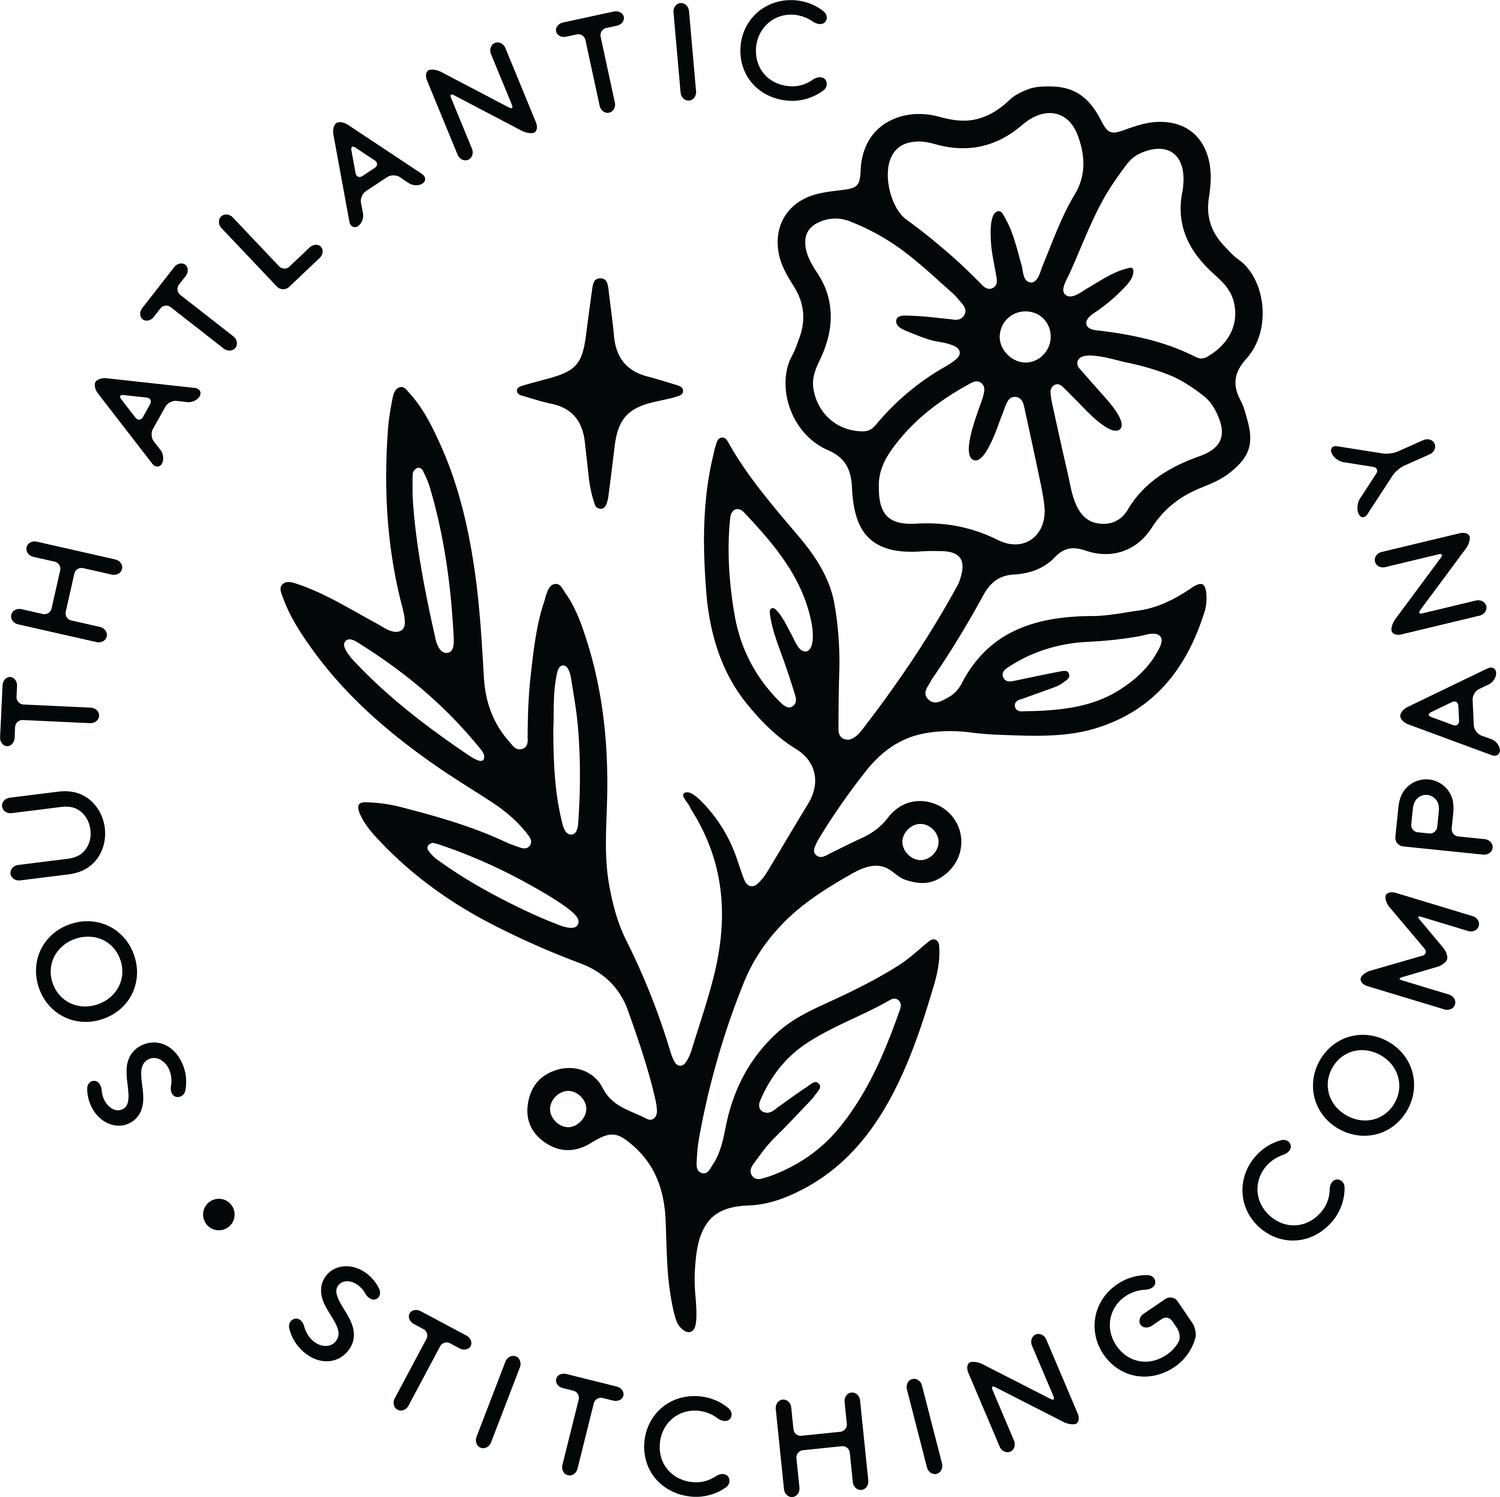 South Atlantic Stitching Company